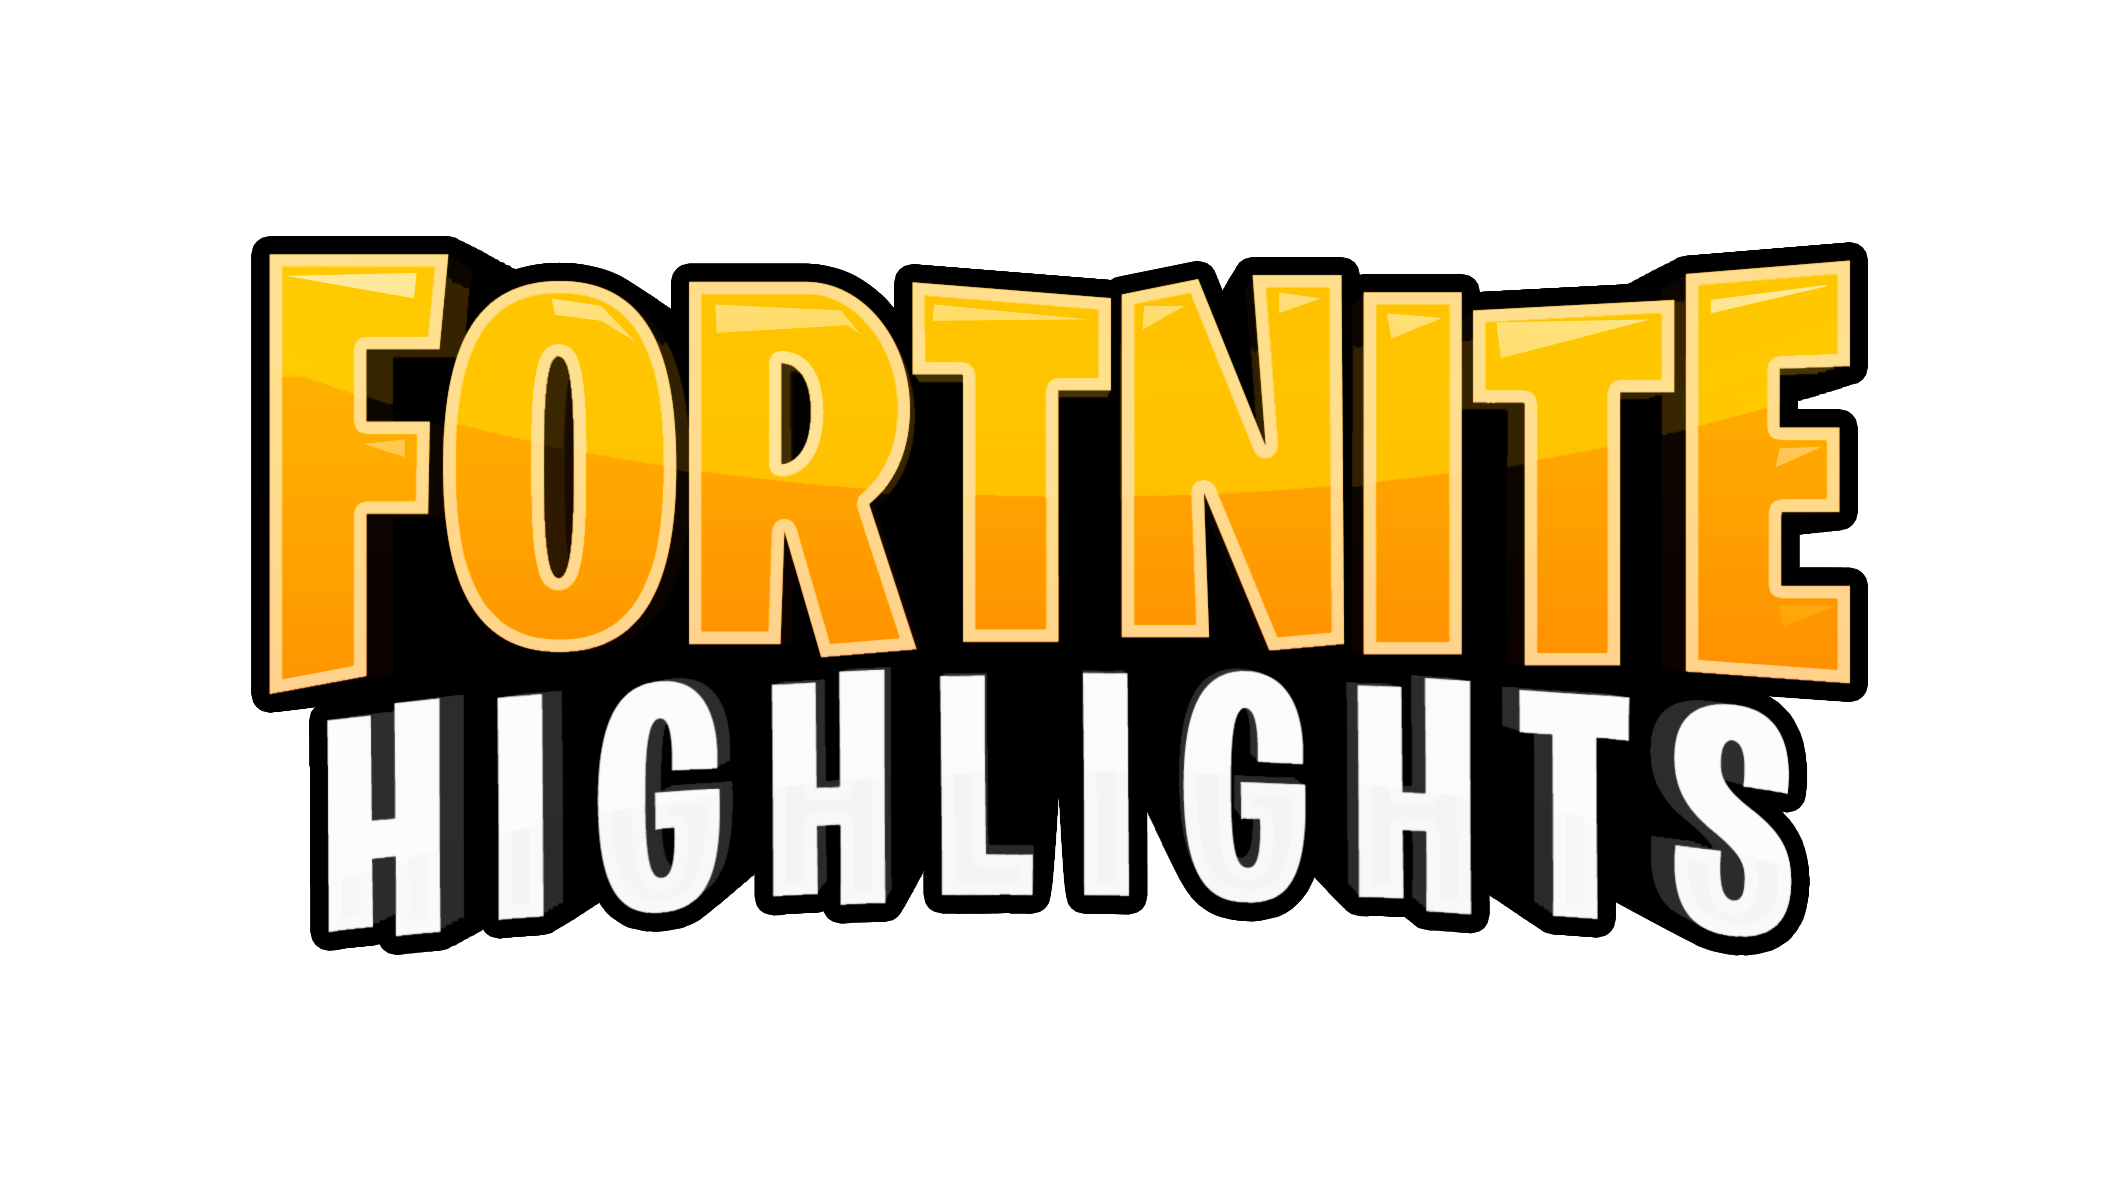 Fortnite Highlights Watermark by FlopperDesigns on DeviantArt